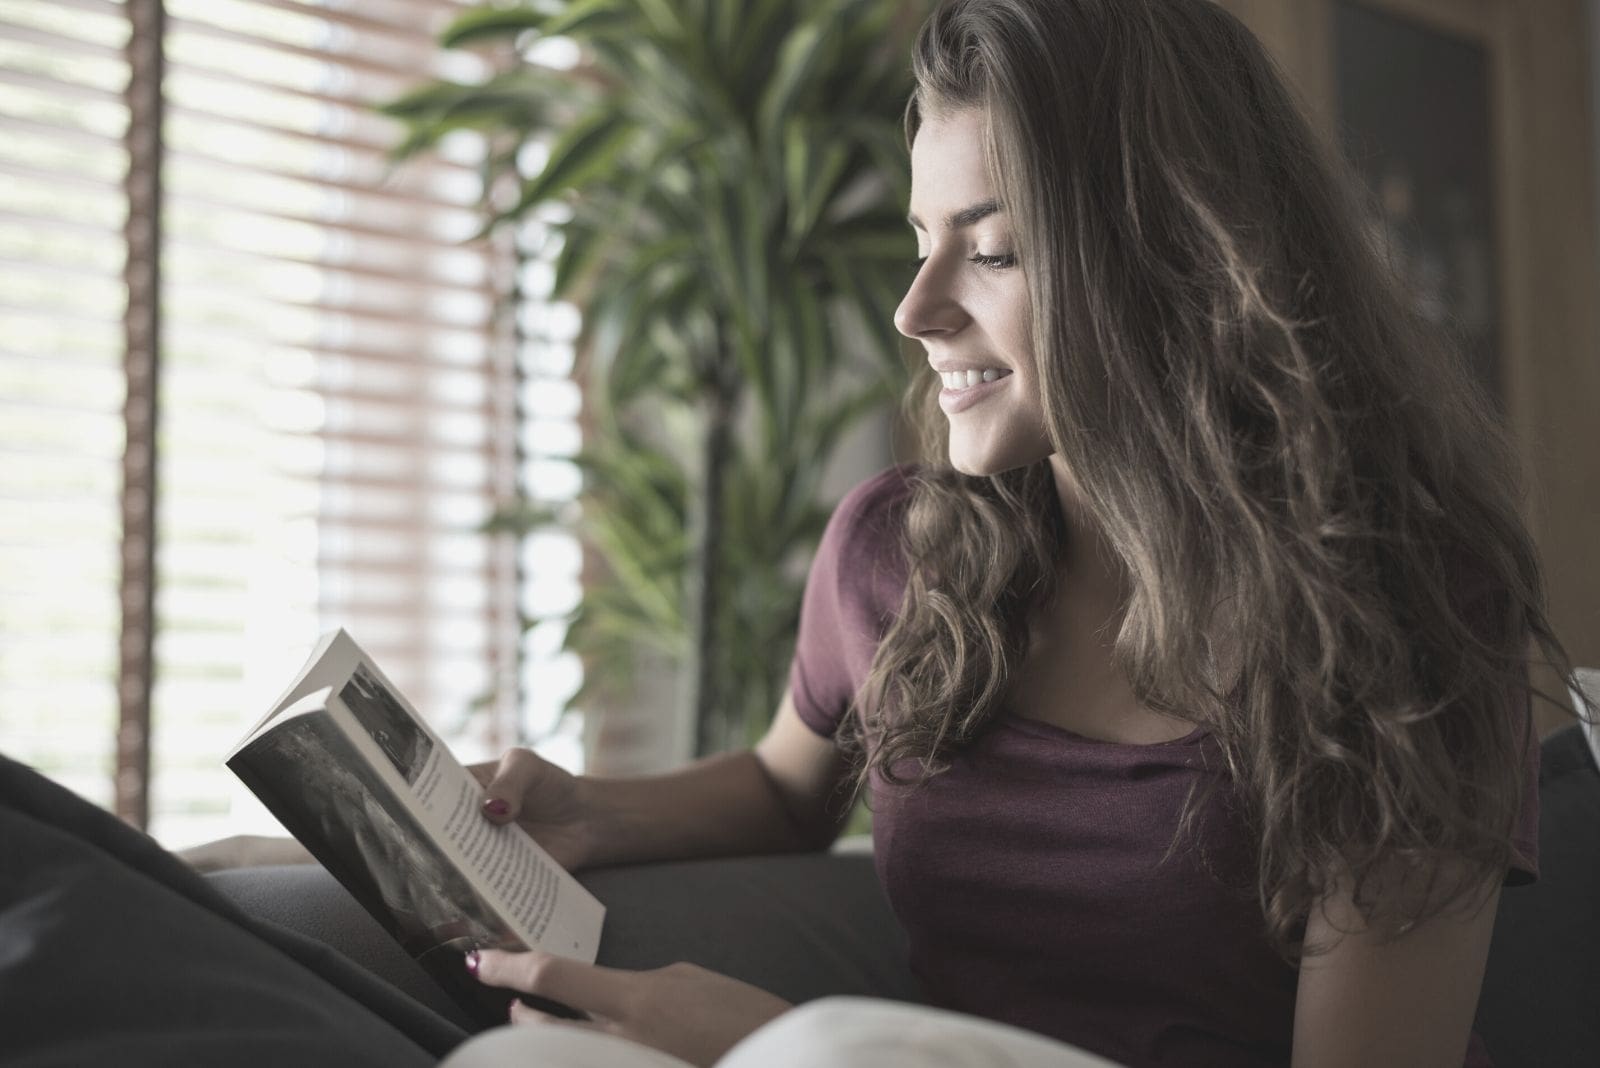 donna che legge un libro e sorride mentre si rilassa e legge un libro 